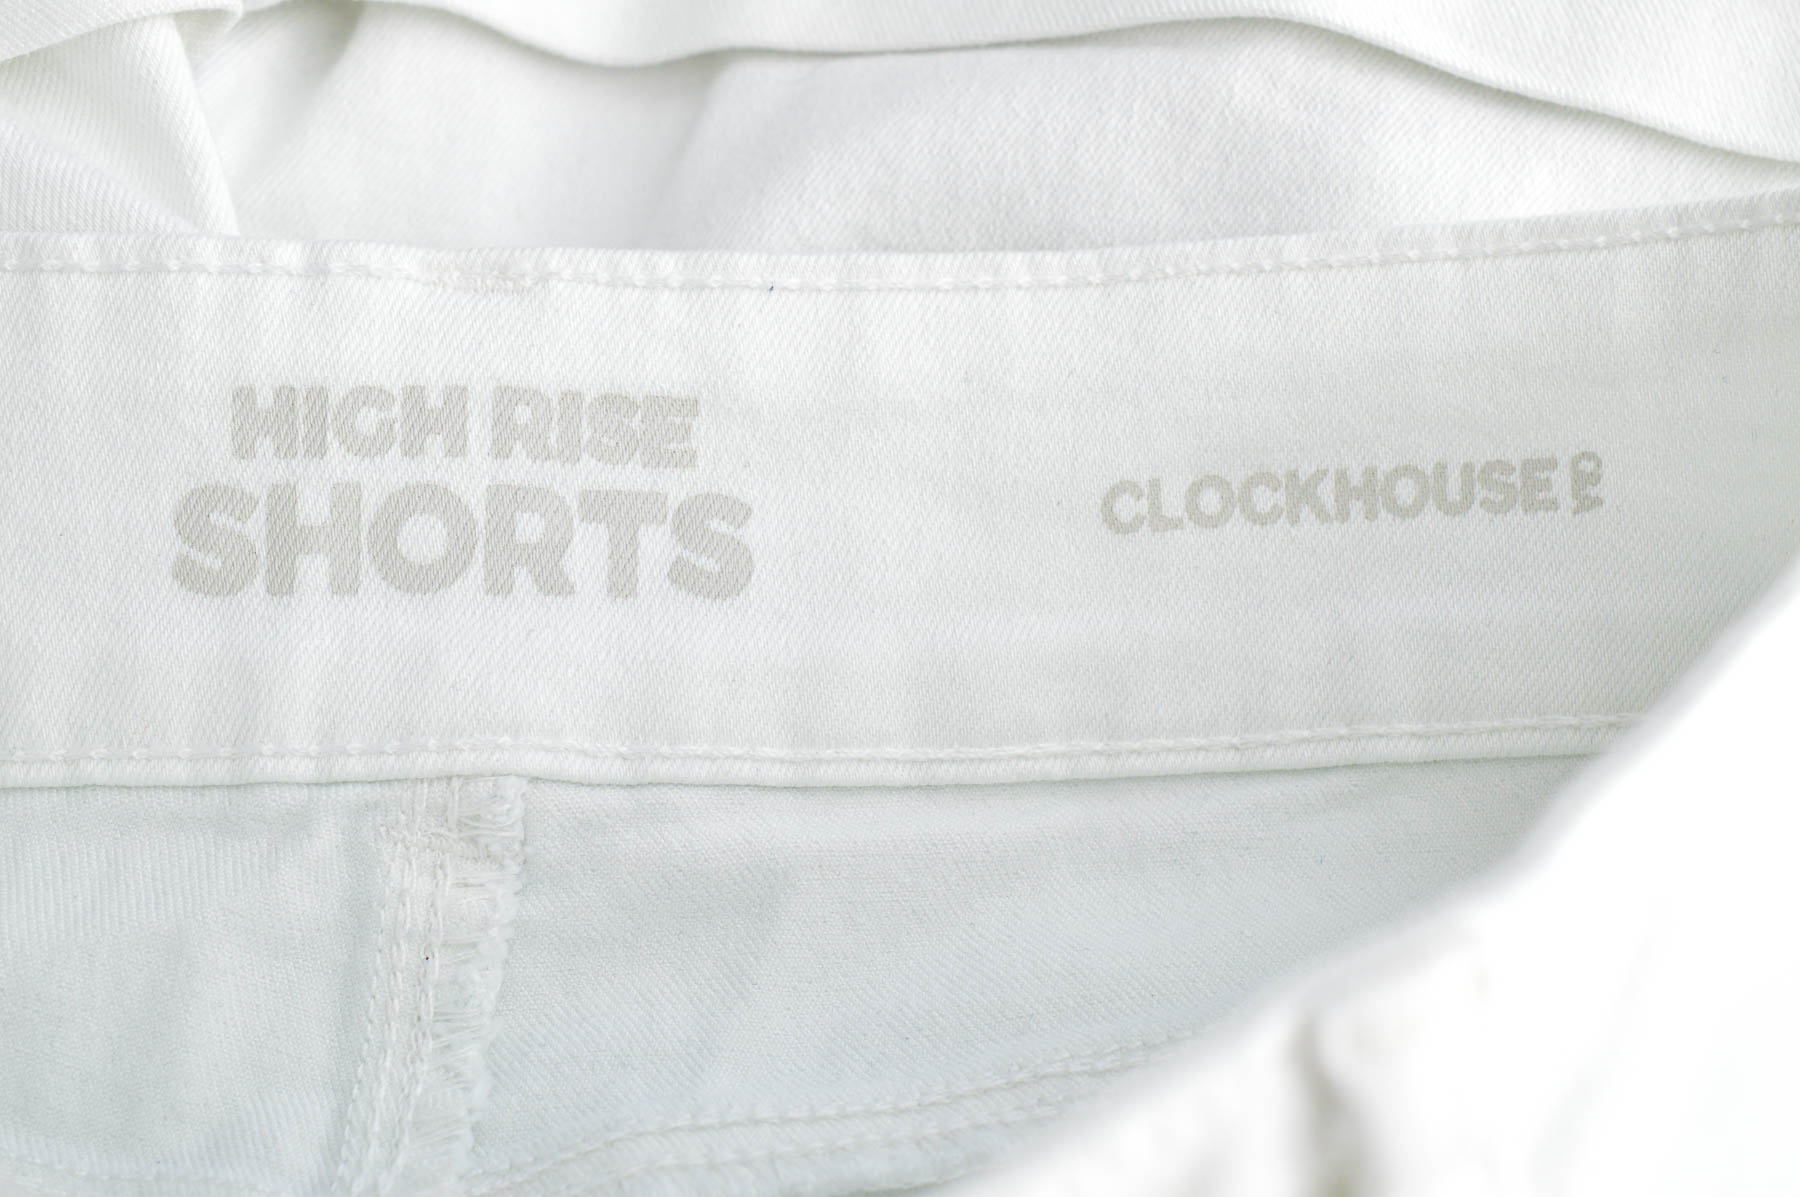 Men's shorts - Clockhouse - 2